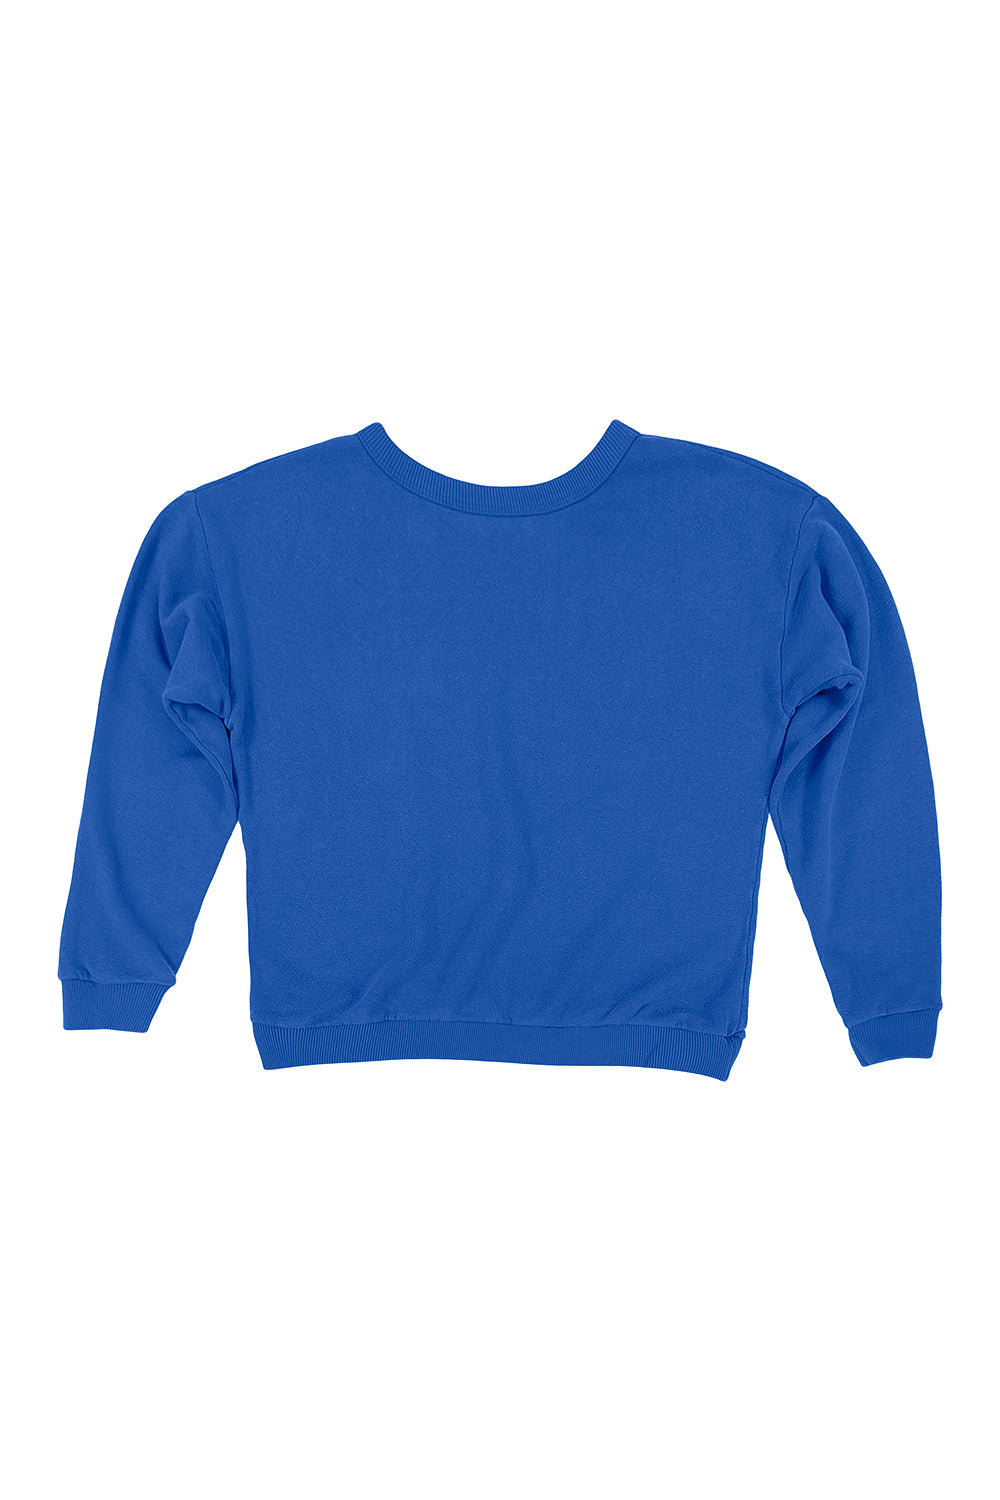 Crux Cropped Sweatshirt | Jungmaven Hemp Clothing & Accessories / Color: Galaxy Blue